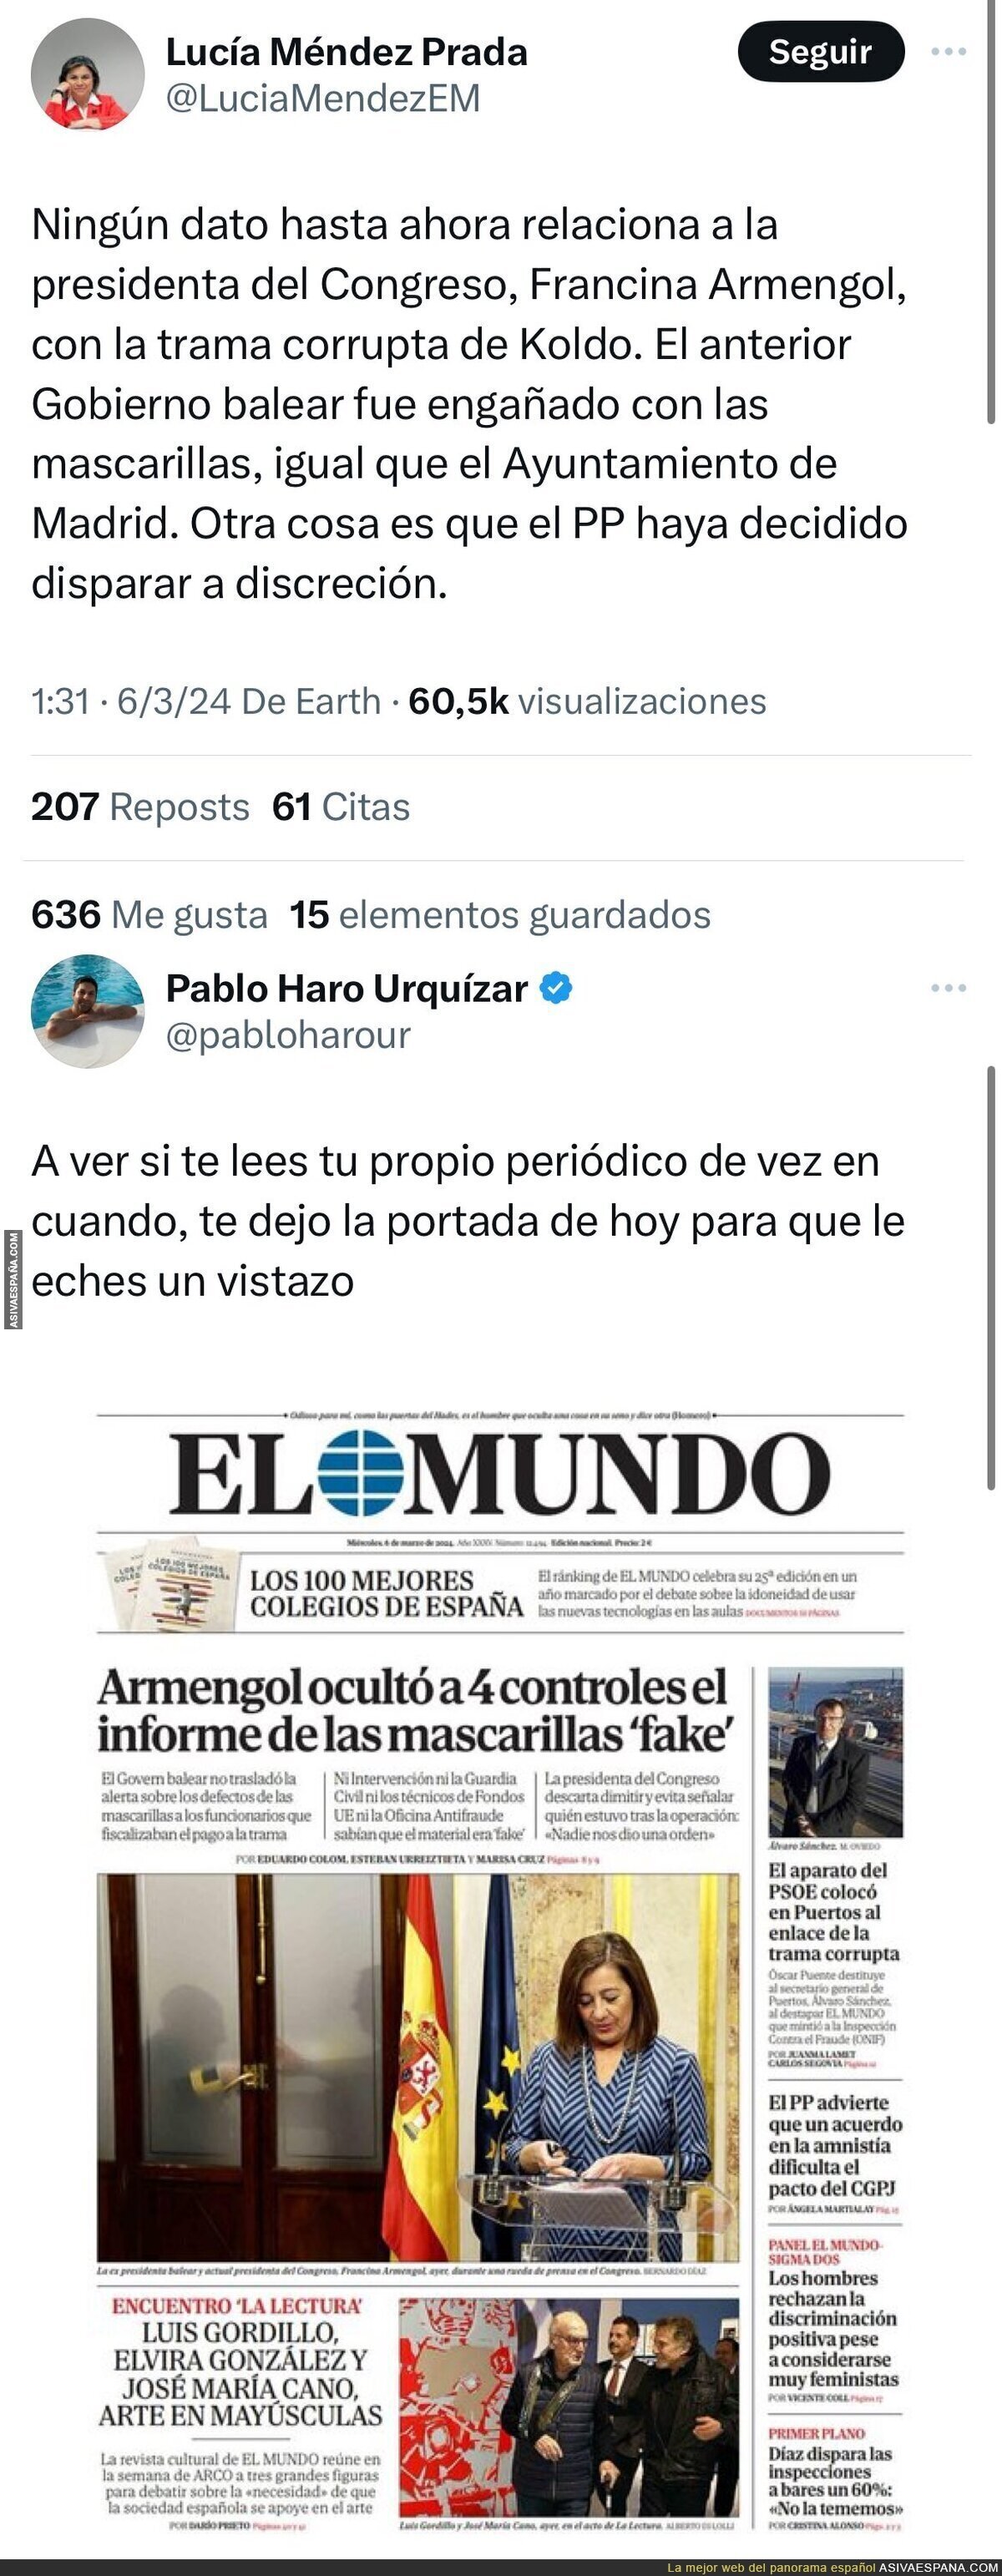 El nivel de periodismo de Lucía Méndez es lamentable